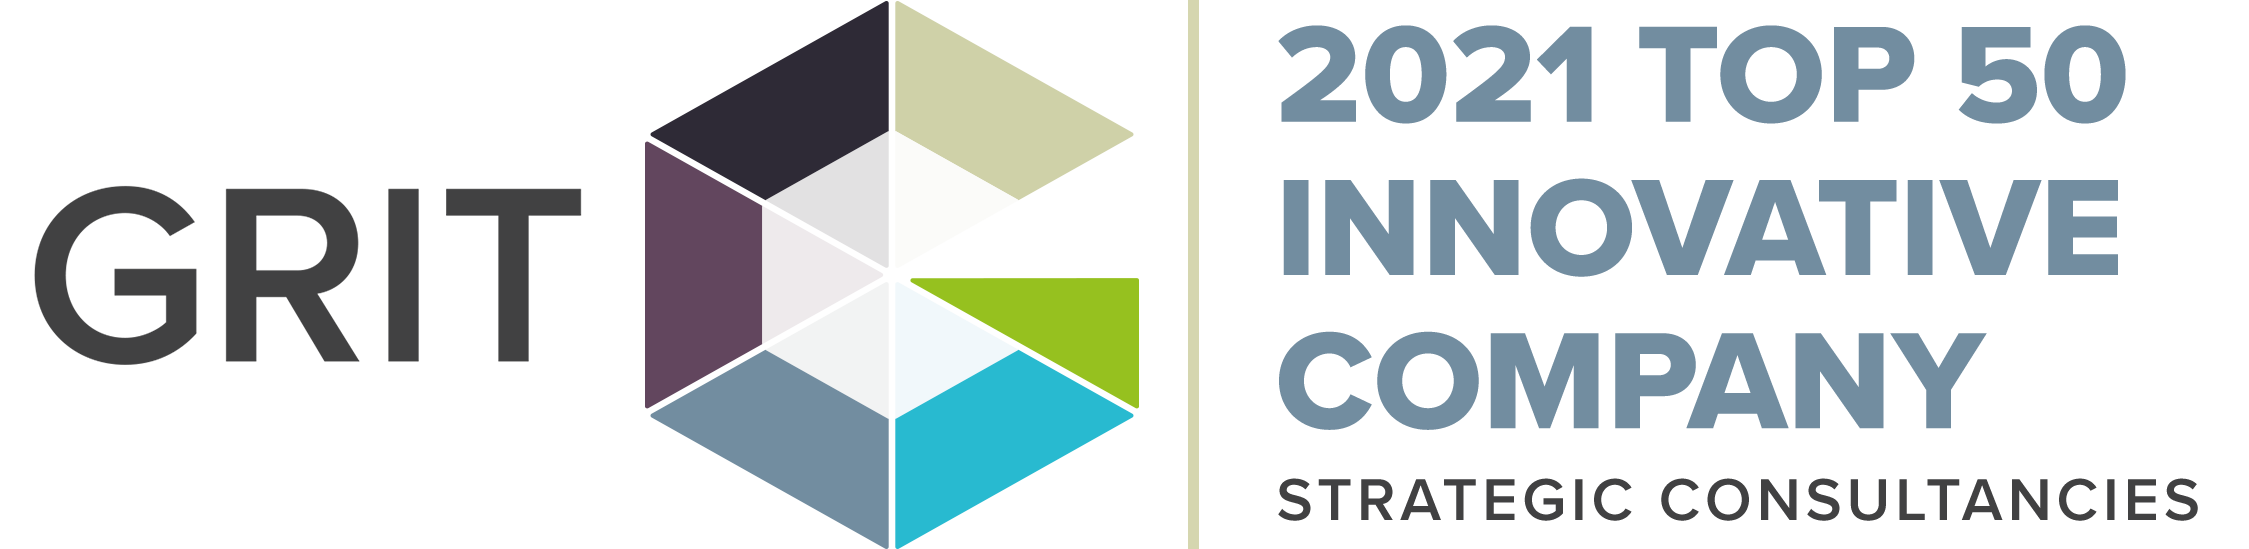 2021 top 50_strategic consultancies badge_color copy